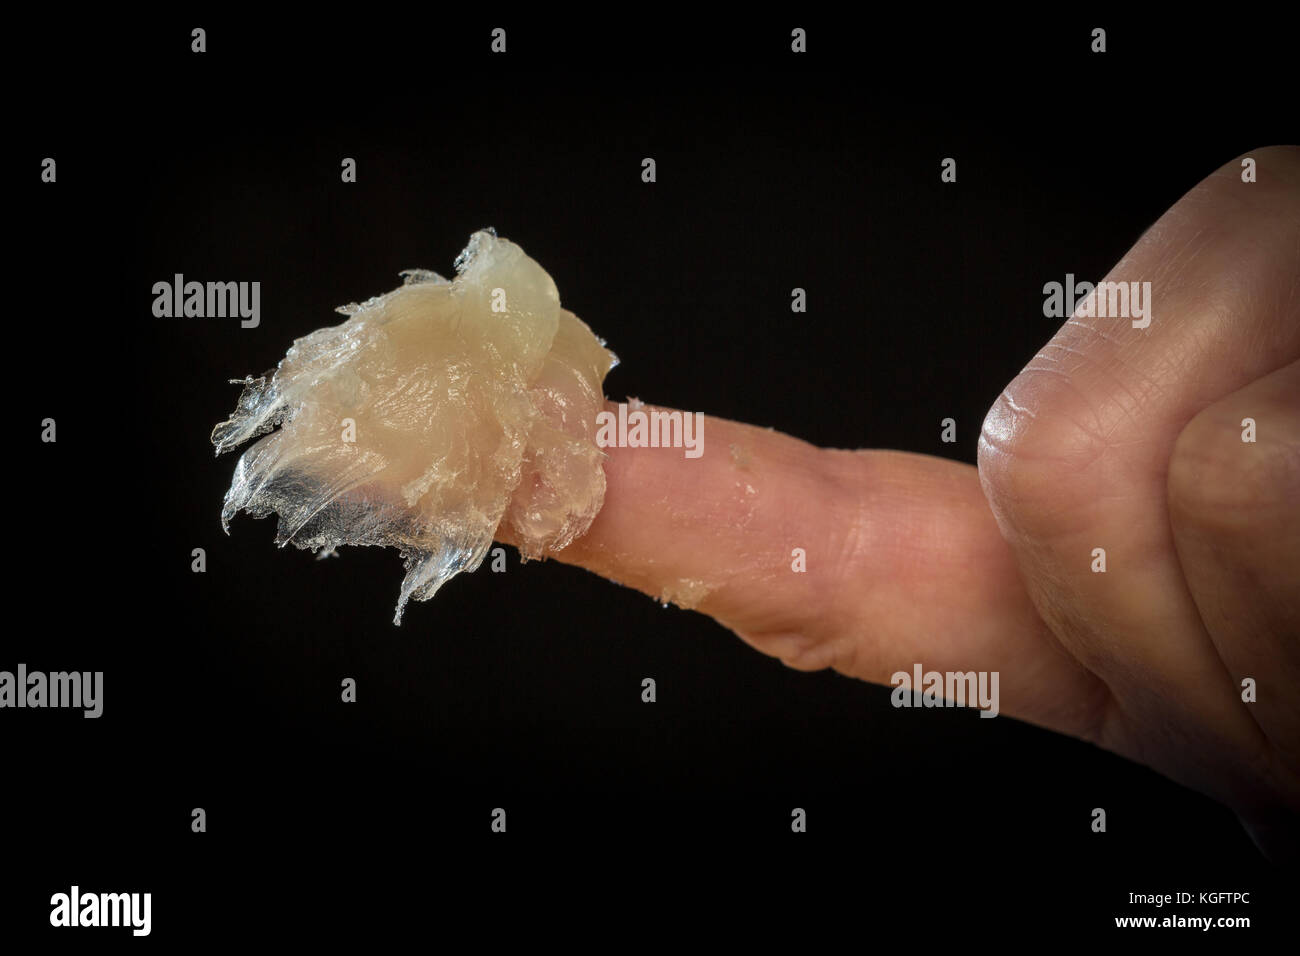 Petroleum jelly, vaseline, on a lady's finger. Stock Photo